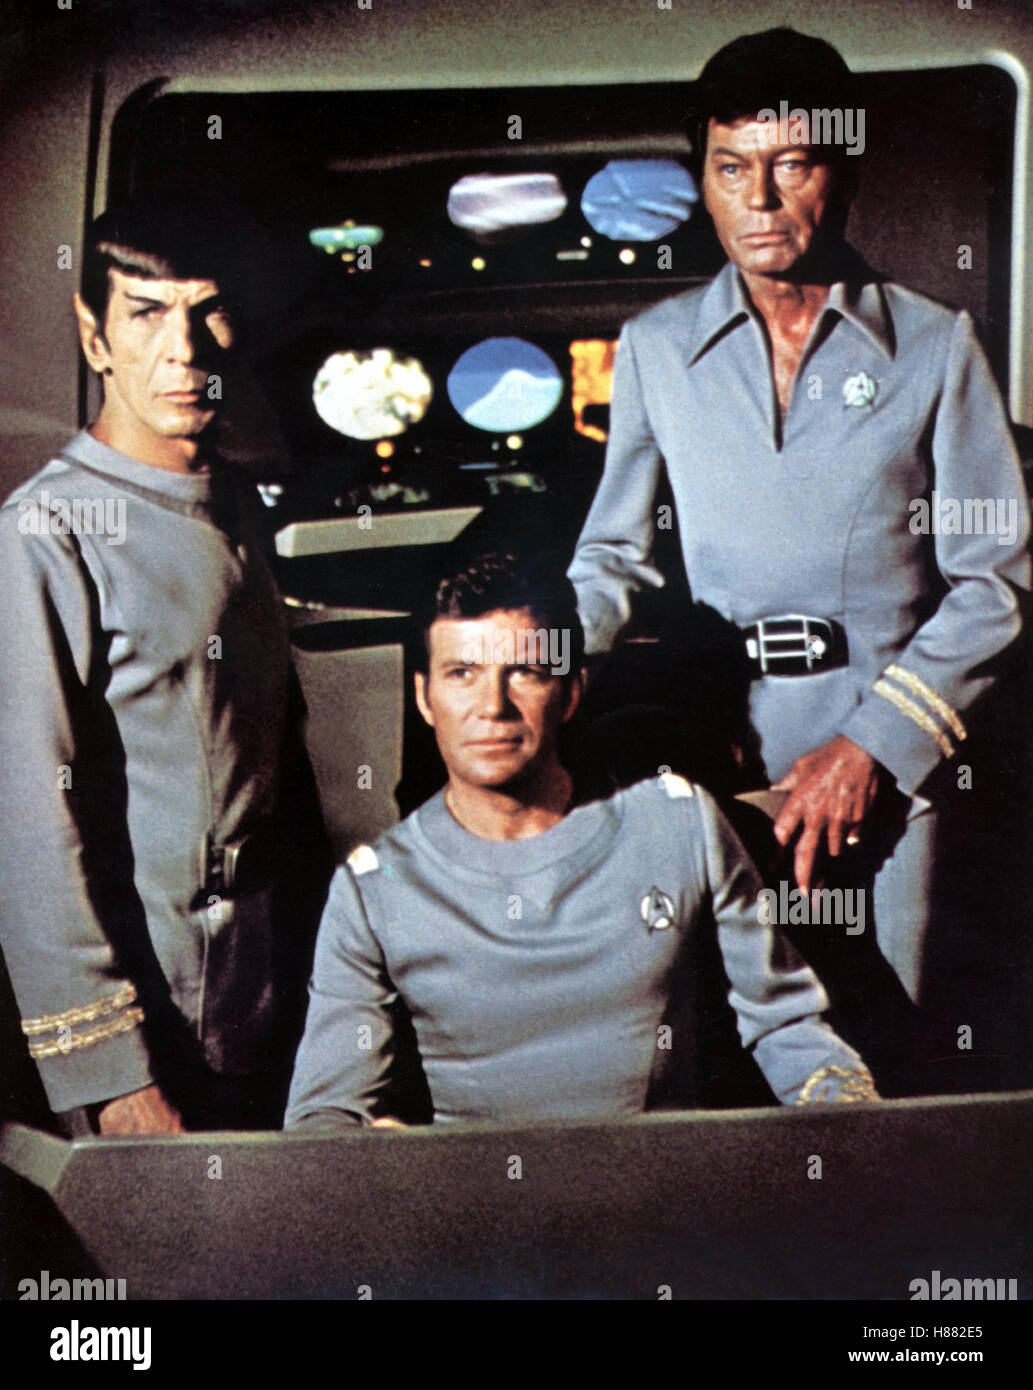 Star Trek - Der Film, (STAR TREK - THE MOTION PICTURE) USA 1978, Robert Wise, LEONARD NIMOY, WILLIAM SHATNER, DeFOREST KELLEY Stock Photo